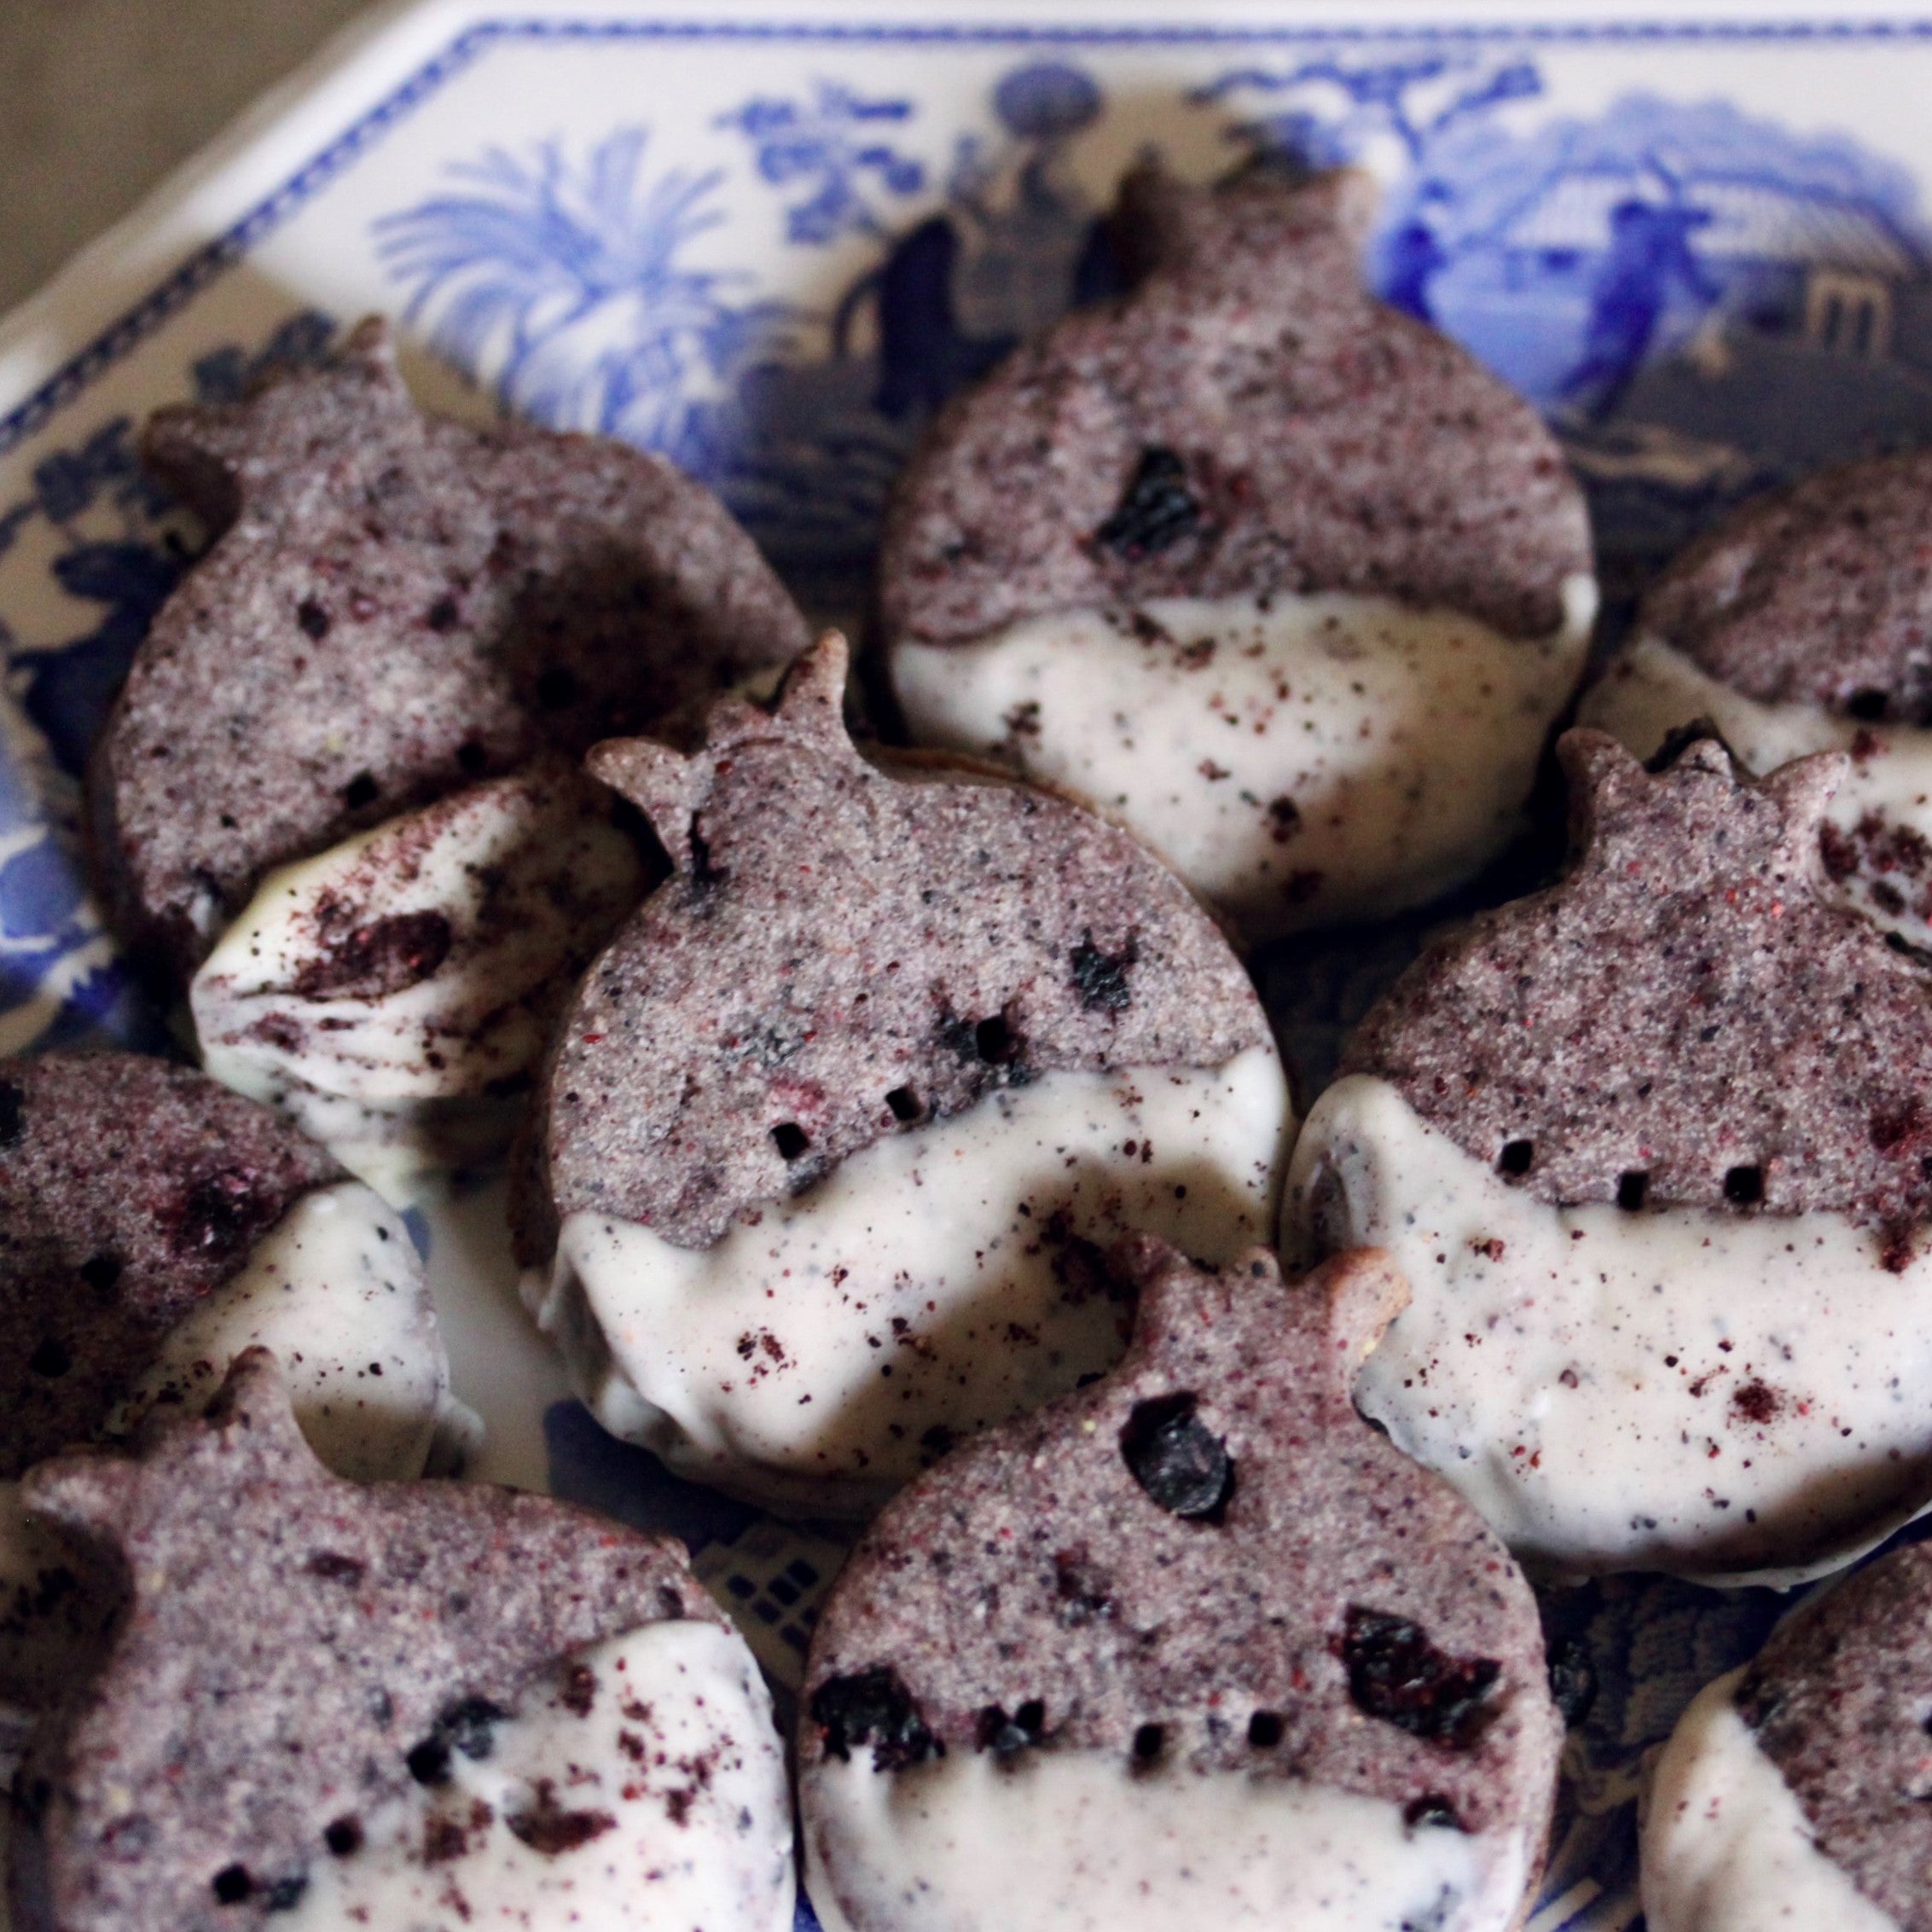 Blueberry Shortbread Cookies